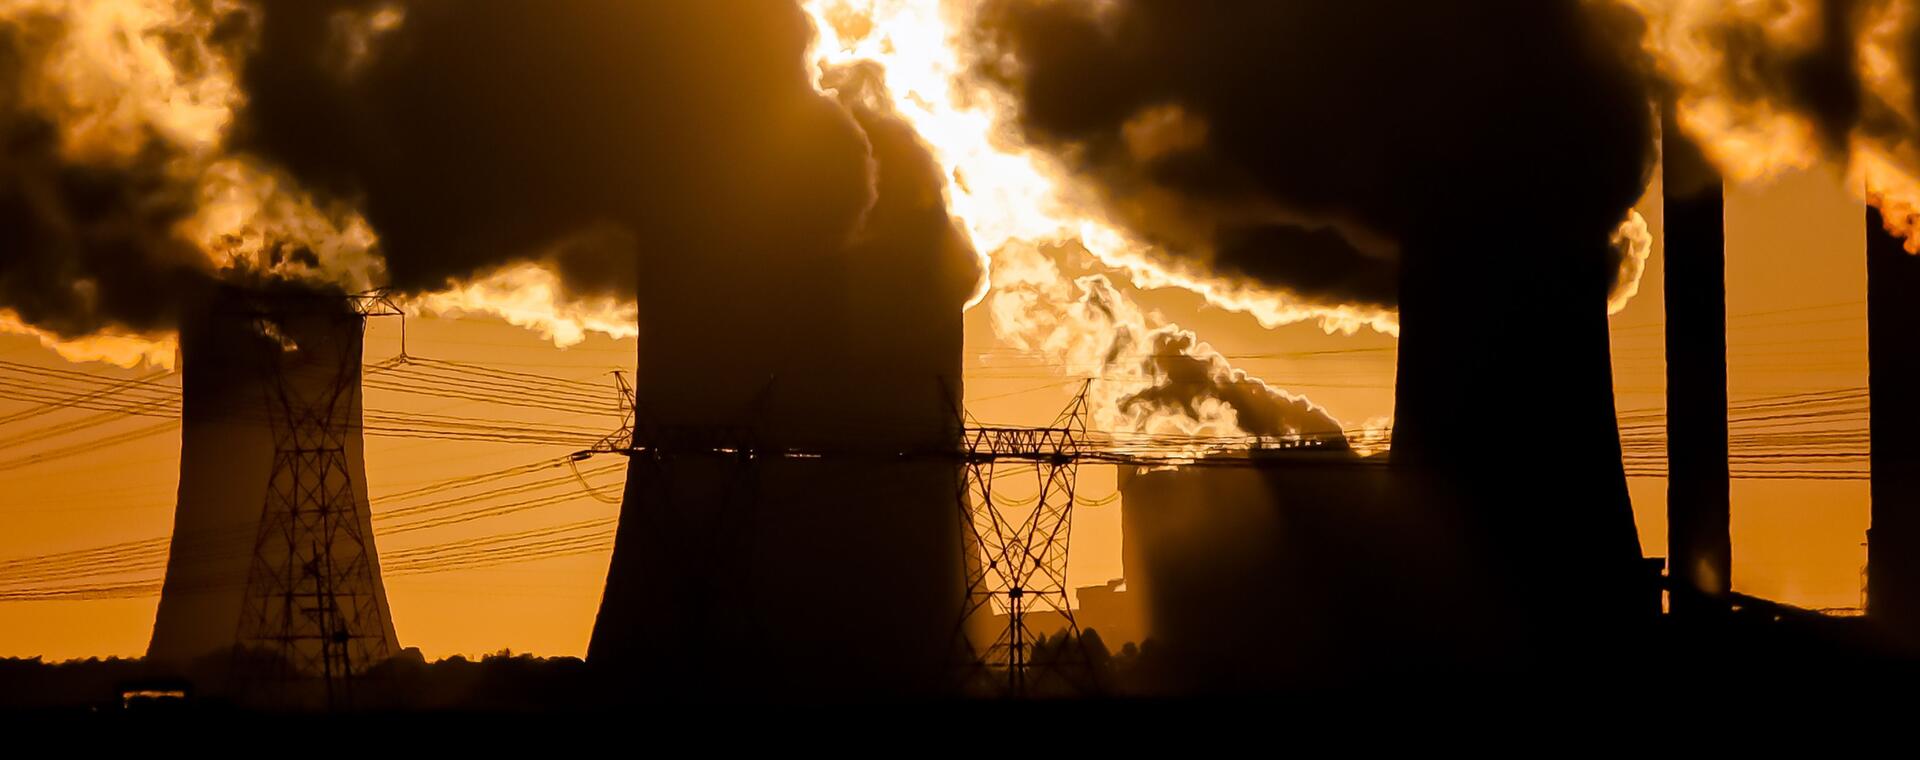 coal power plant with smoke against orange sunset